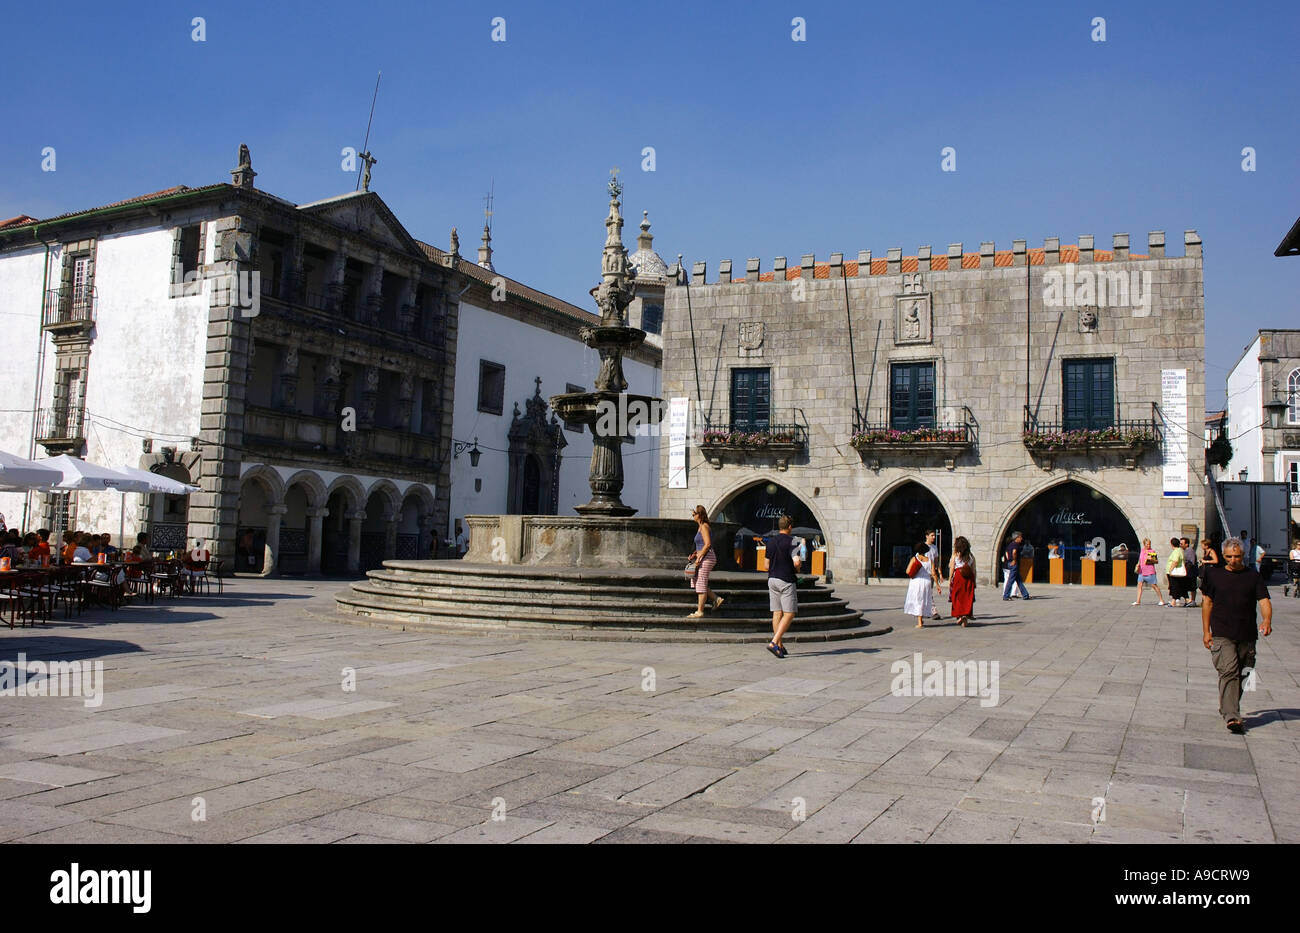 Ansicht von Viana Castelo quadratische XIII Jahrhundert Hauptort Costa Verde Porto Norte Portugal Iberische Halbinsel Nordeuropa Stockfoto